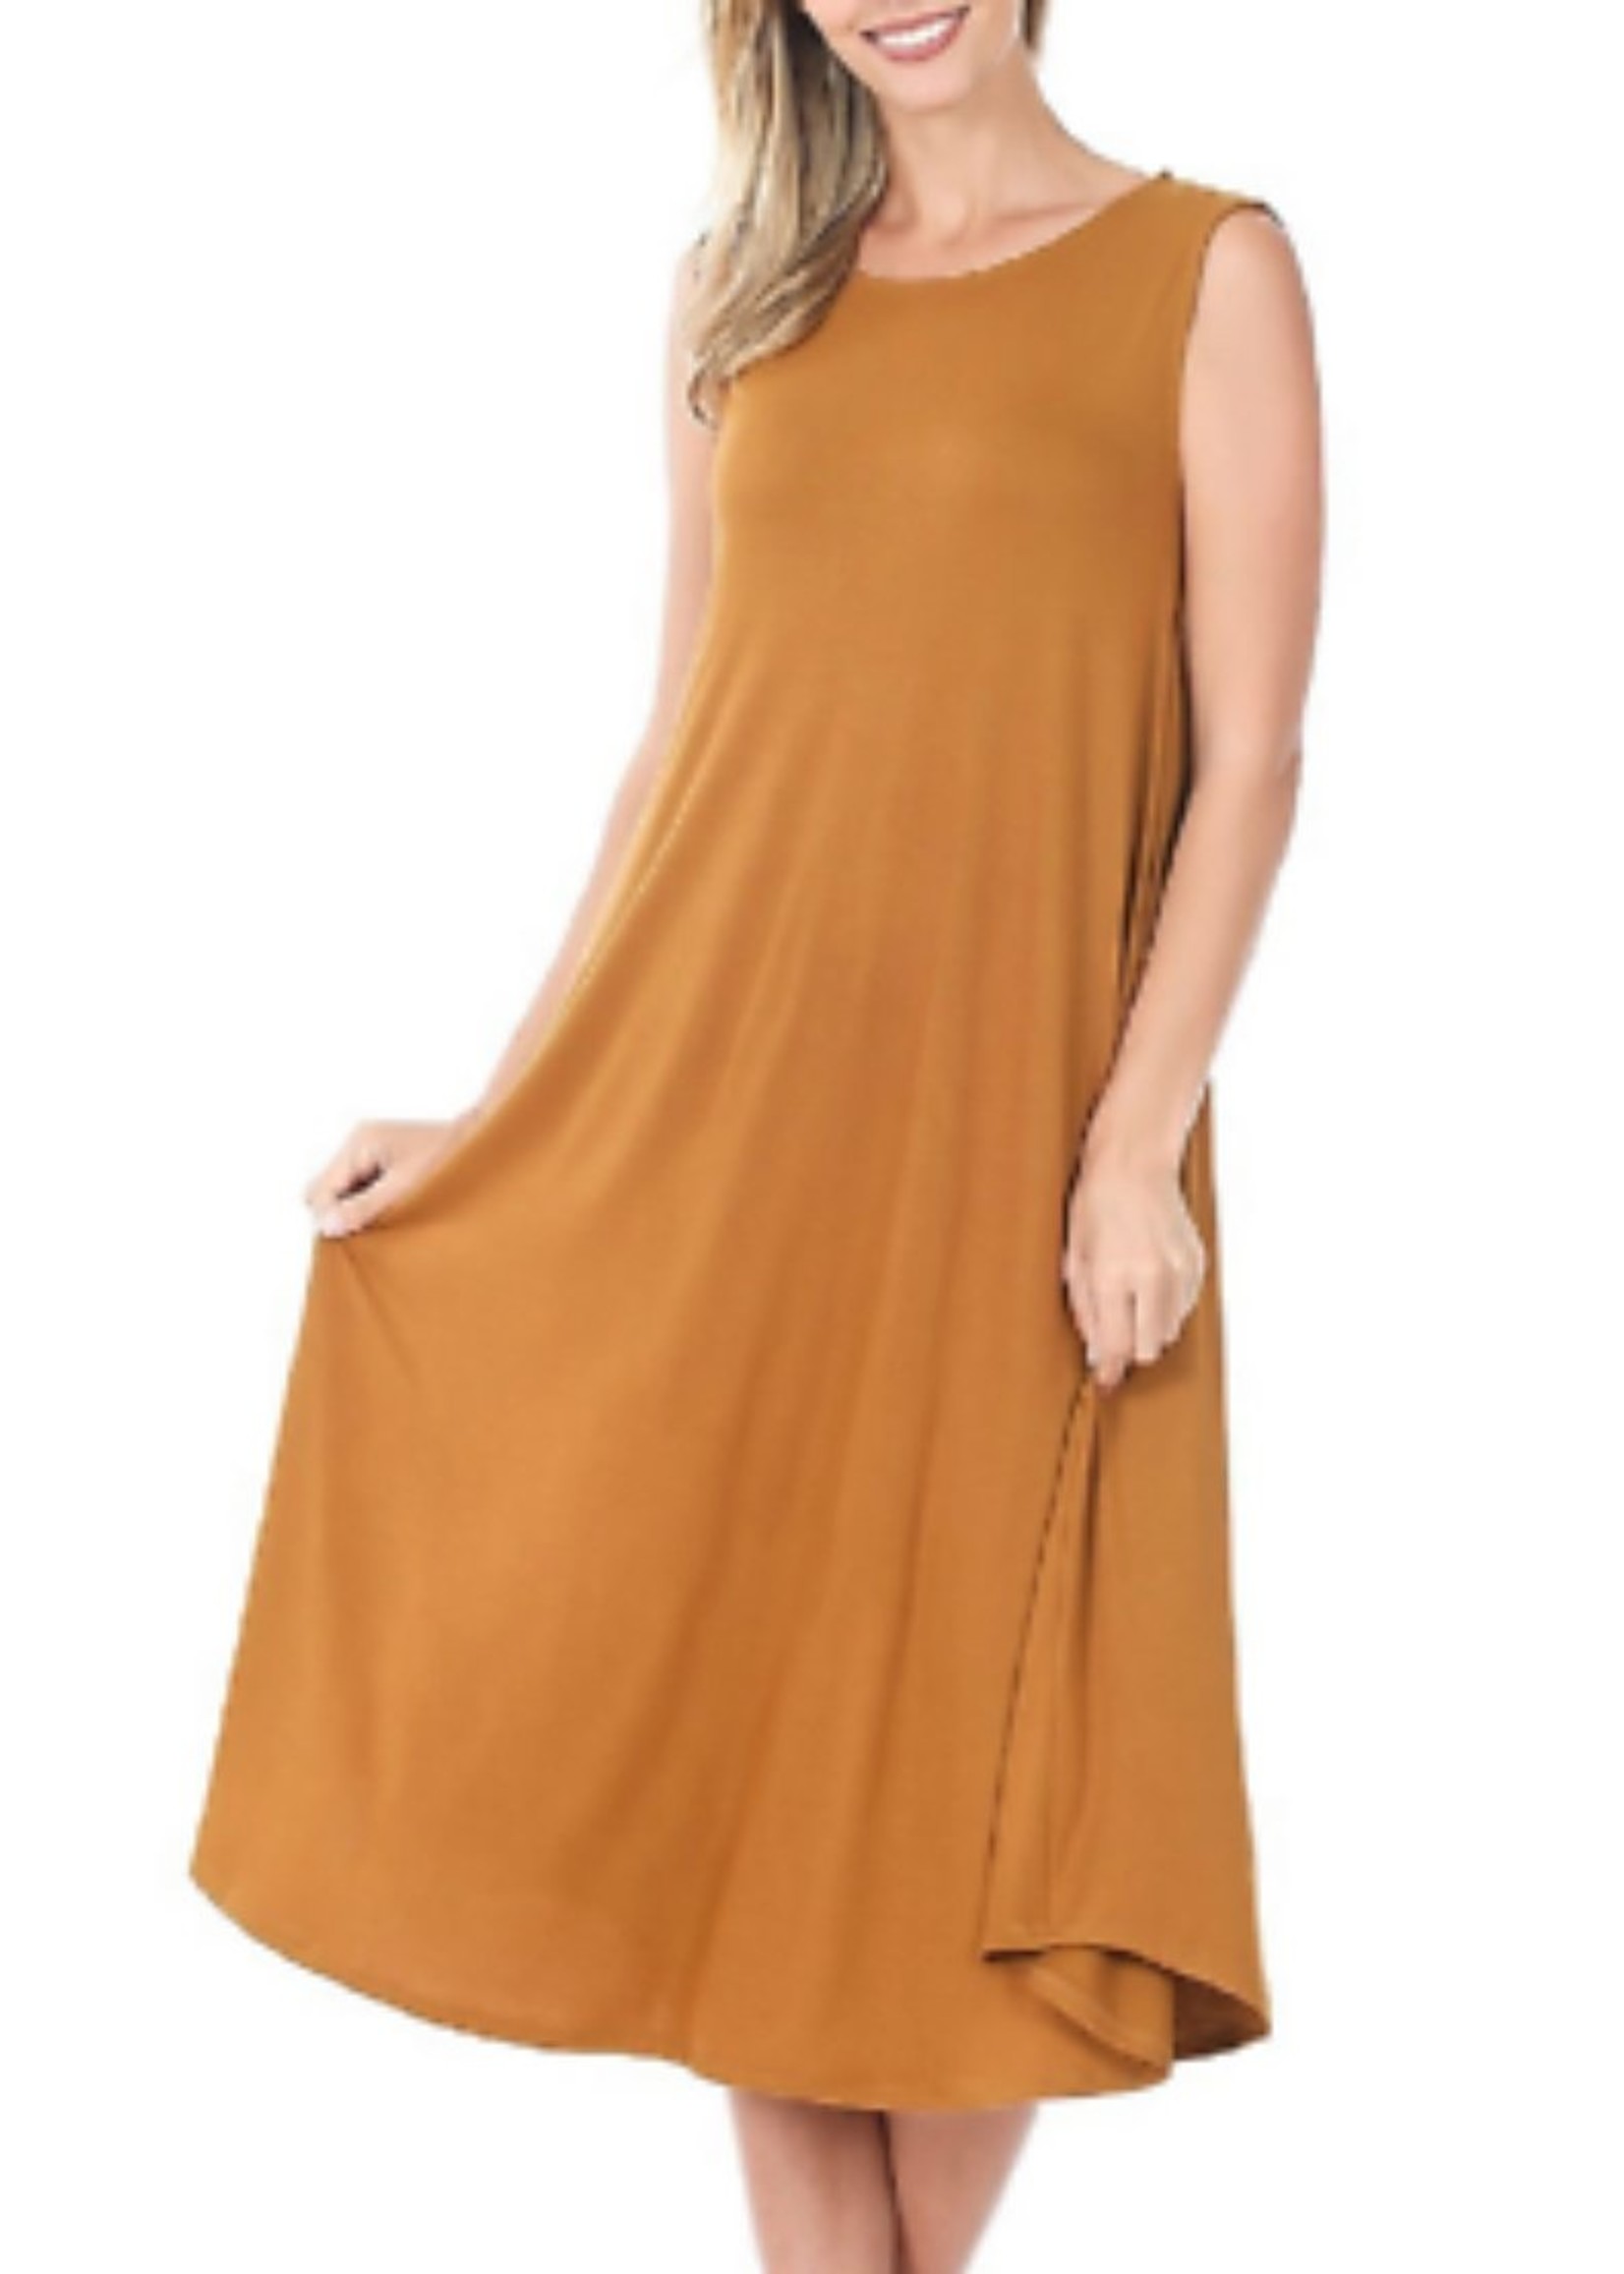 Zenana Sleeveless swing dress - gray, tan or gold